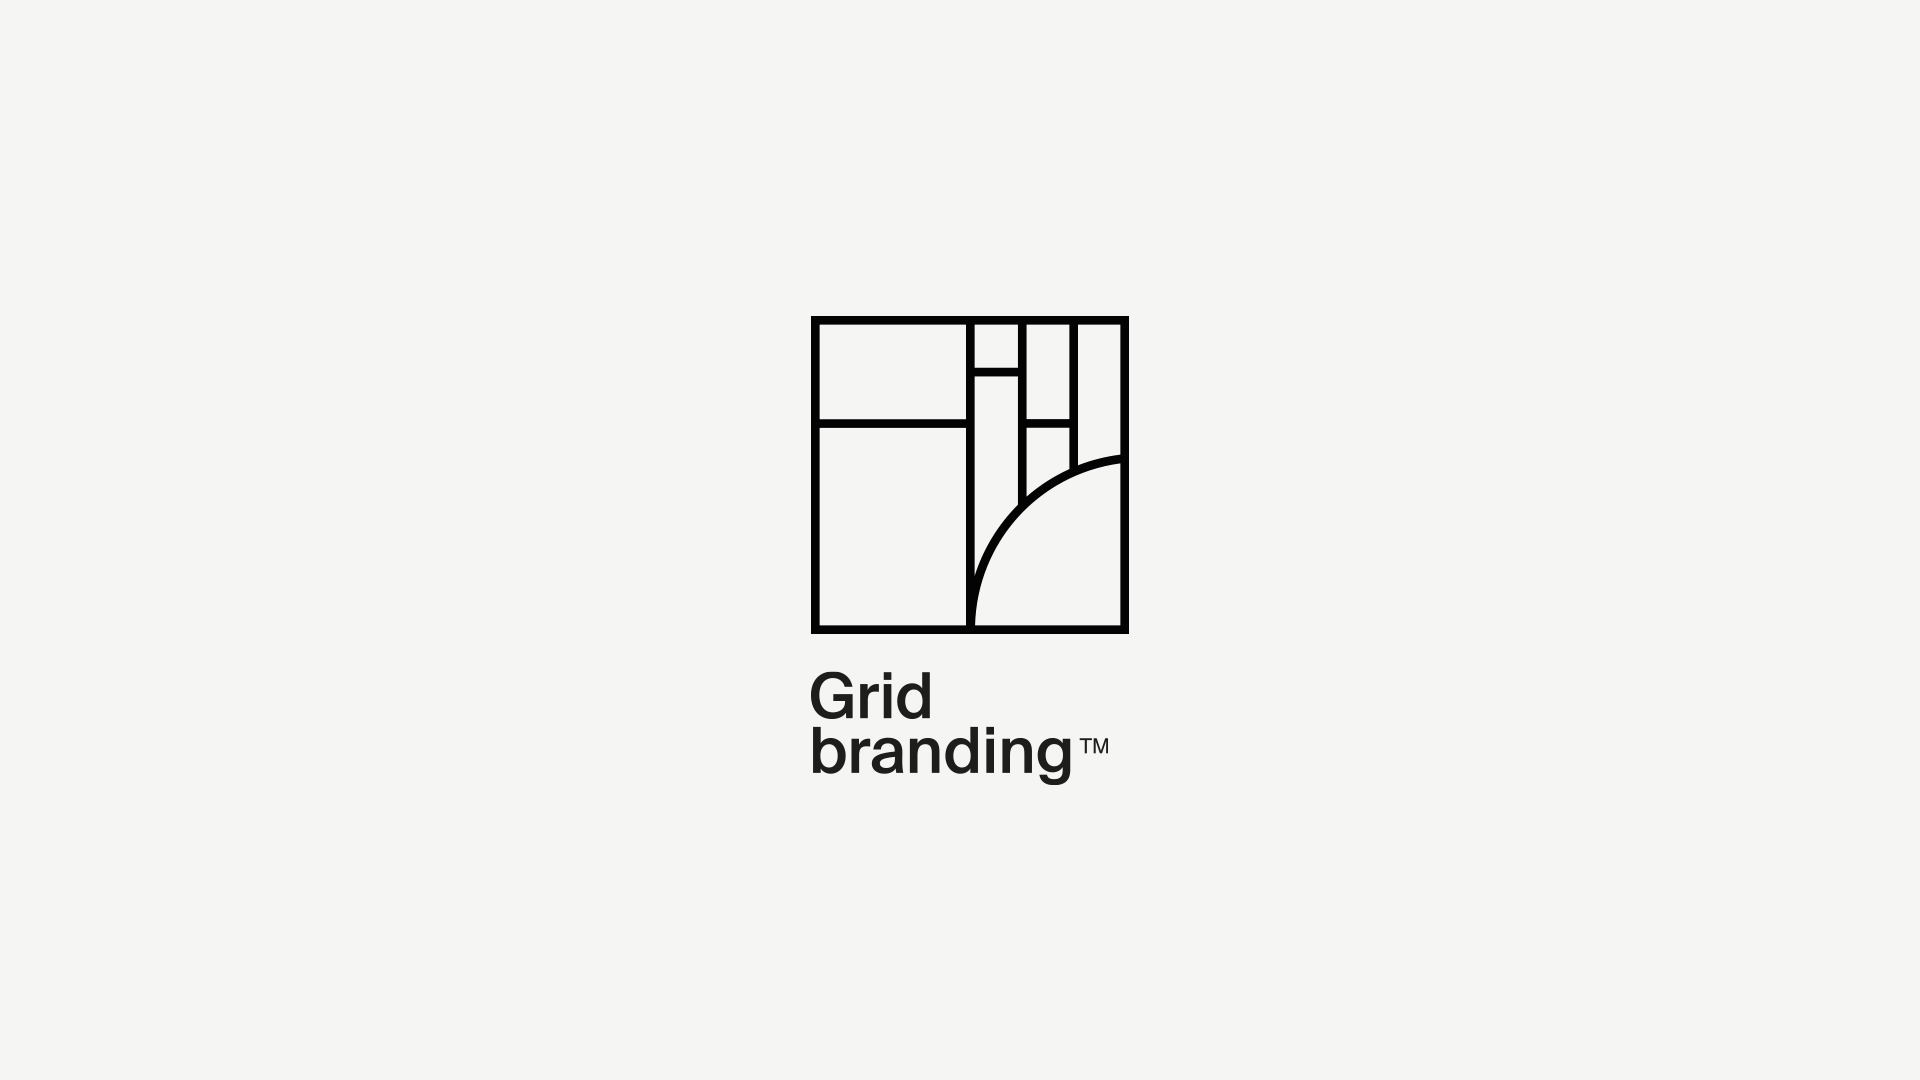 Grid branding